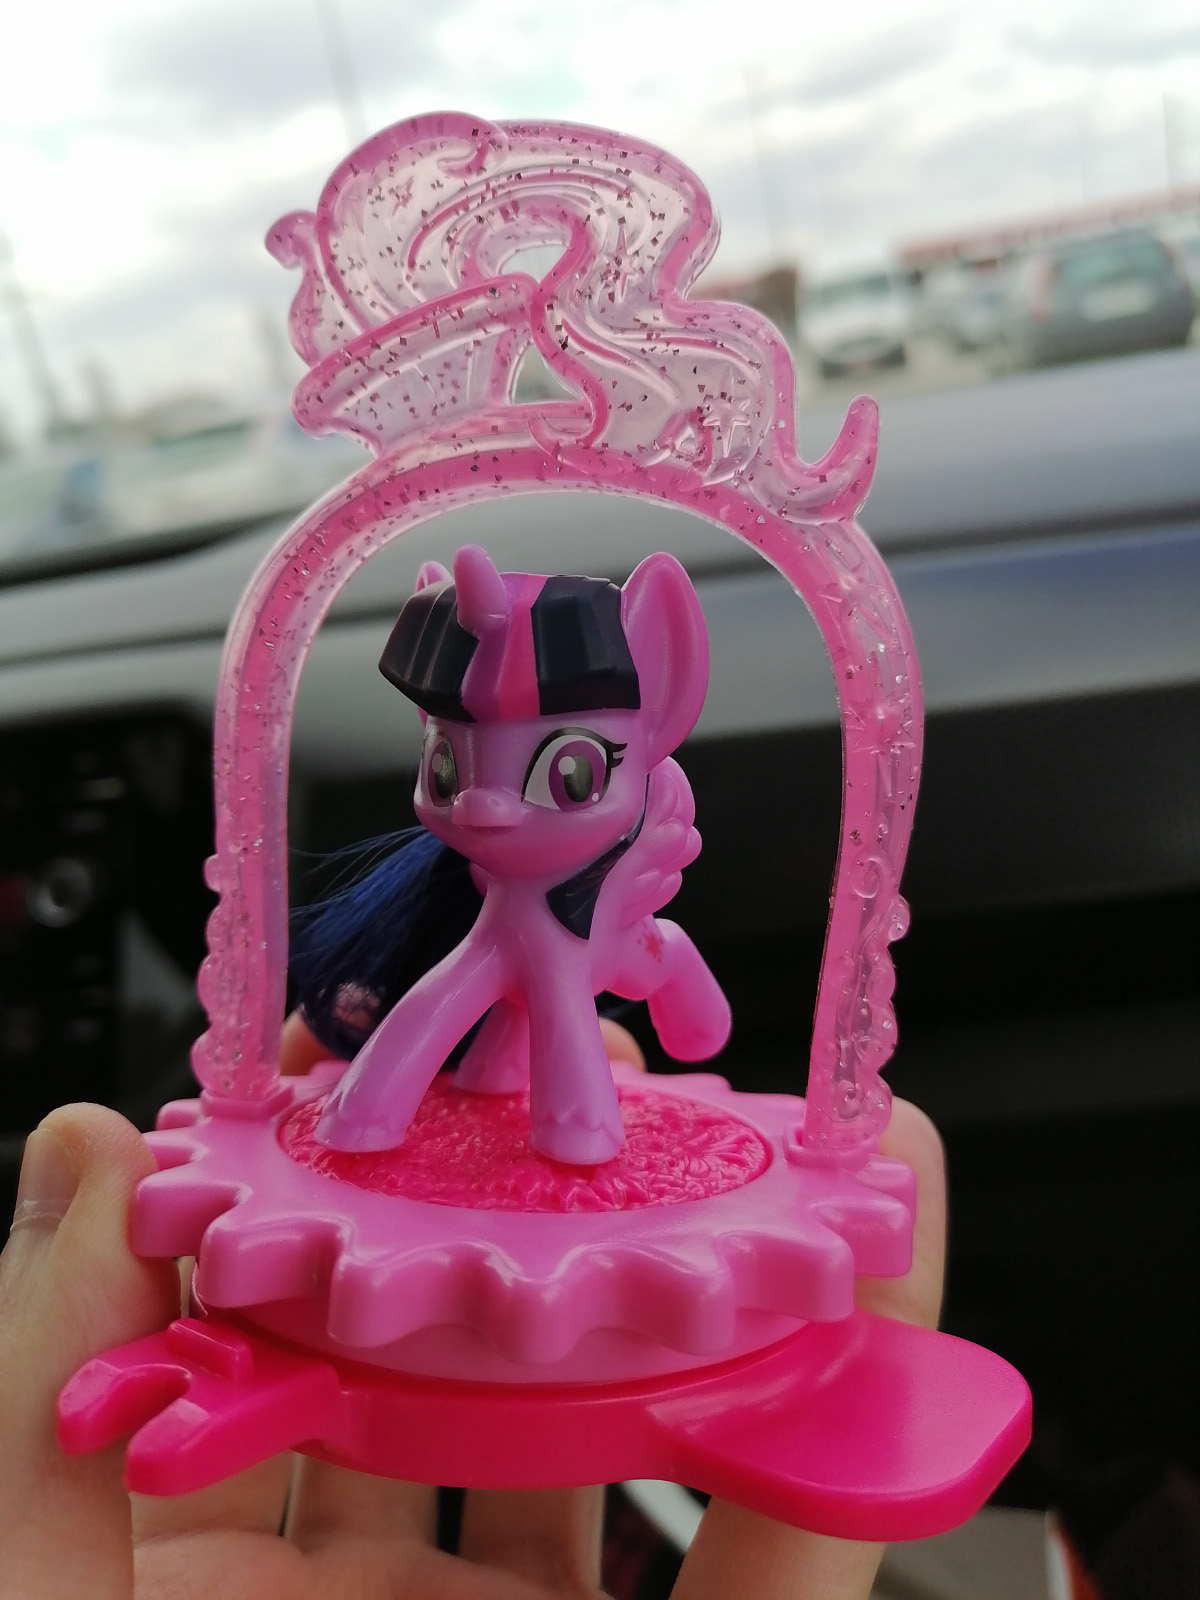 Details about   My Little Pony Figures Pinkie Pie Fluttershy Twlight 3pc Lot Hasbro Mcdonalds 